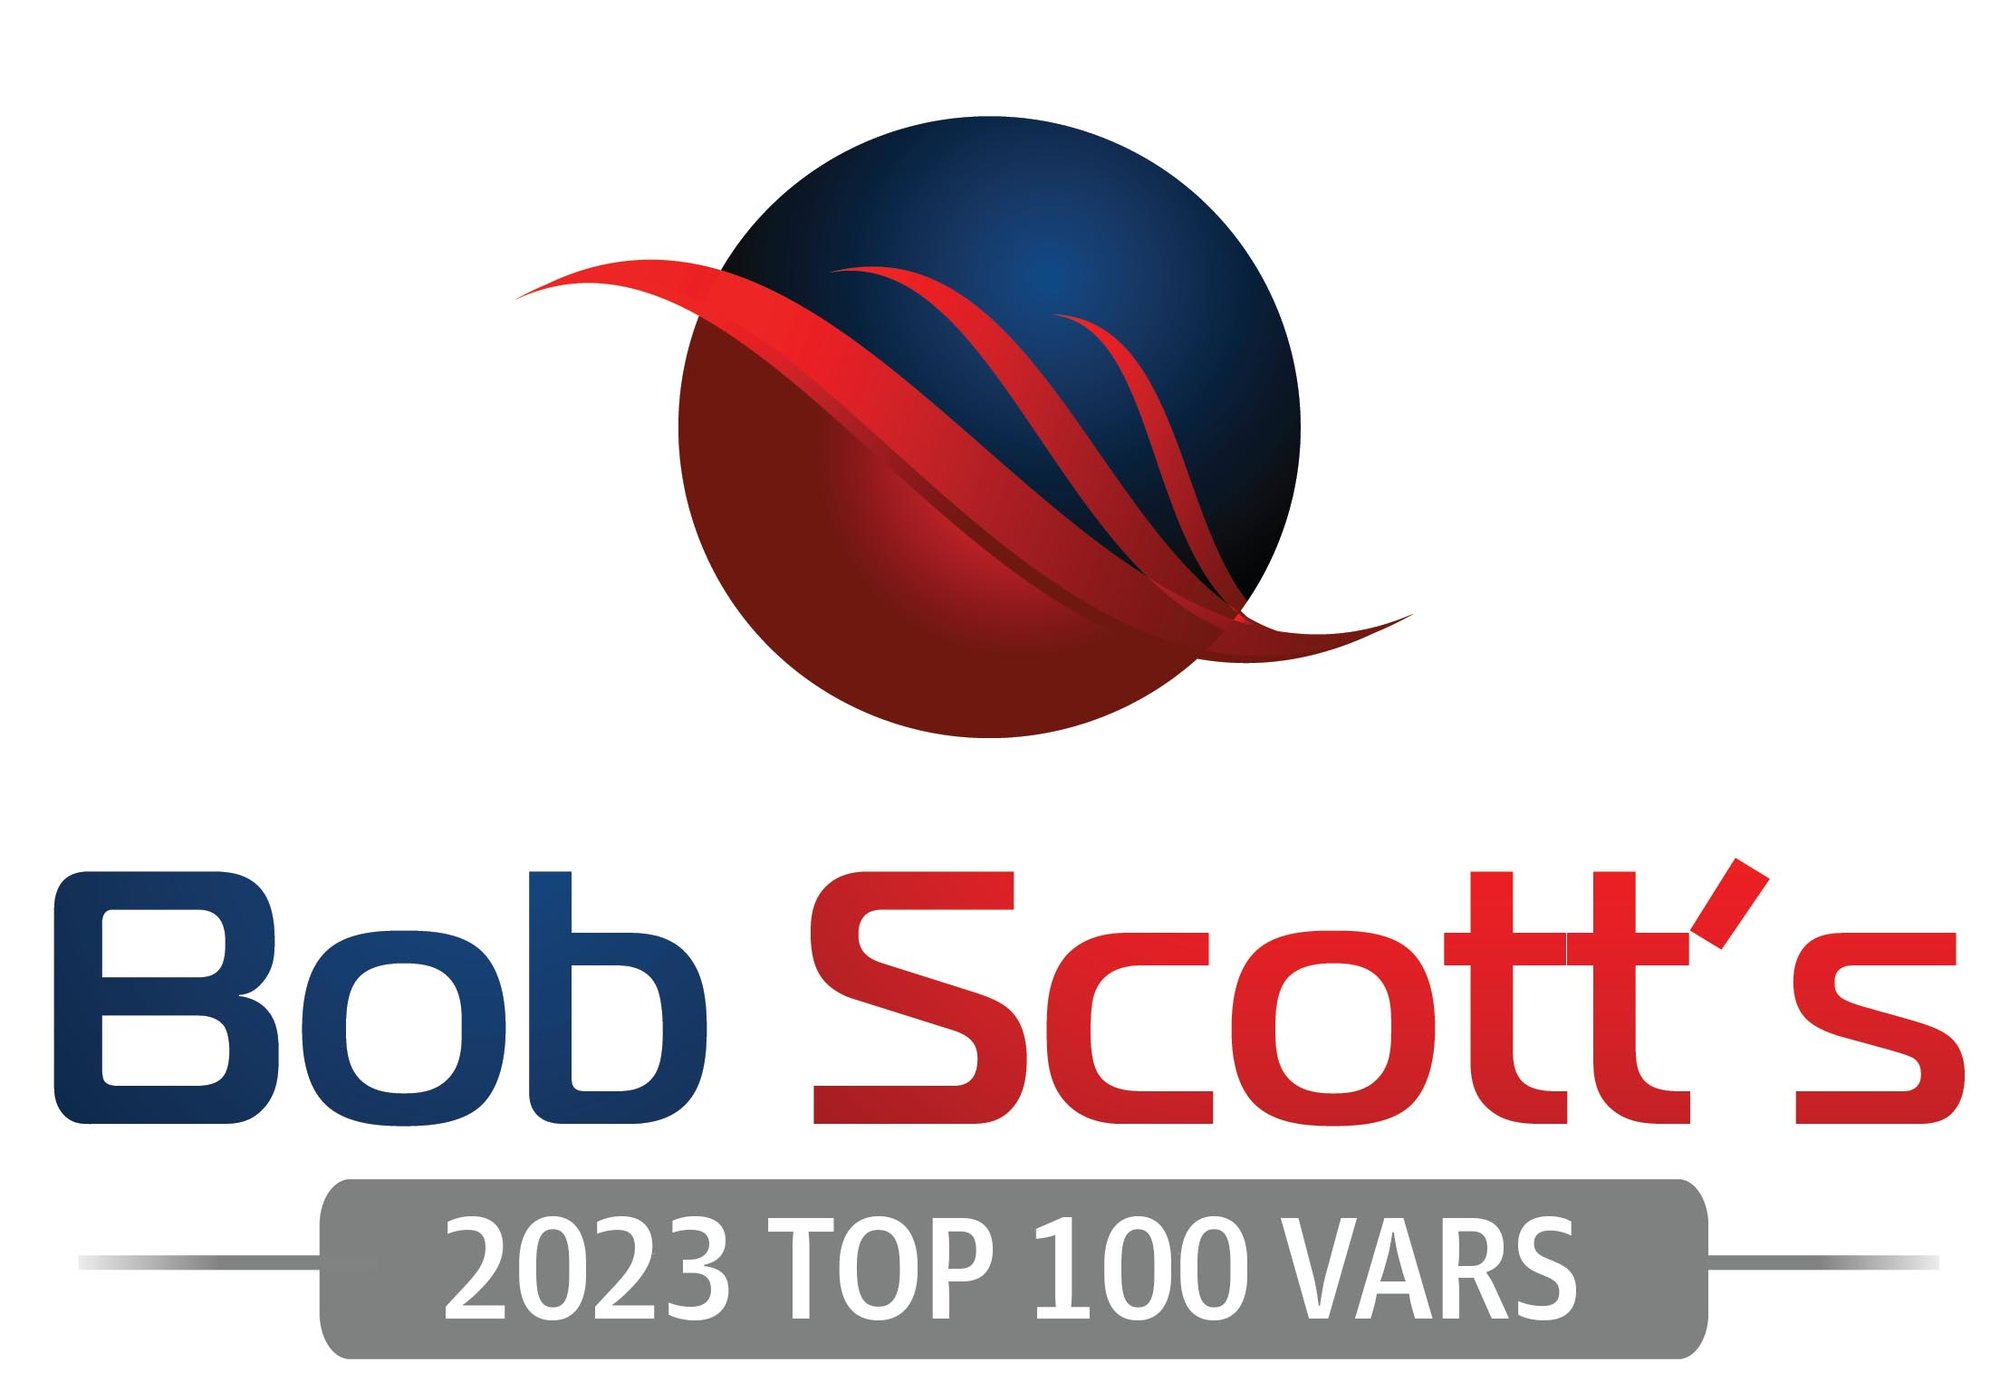 9.2023 Bob Scotts Top 100 logo